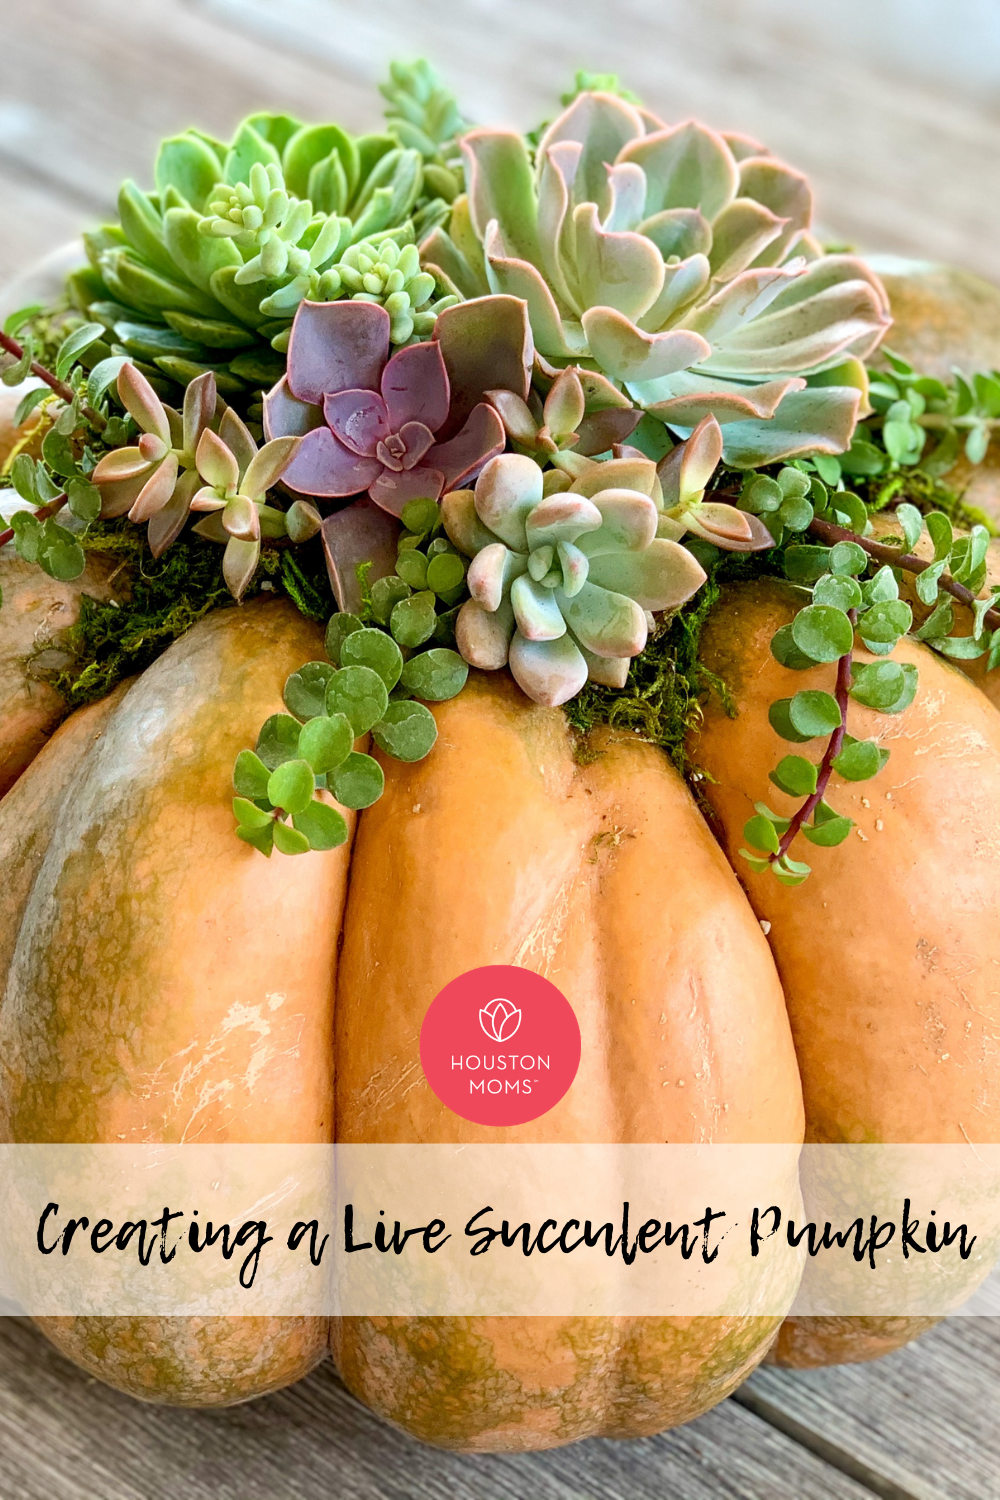 Houston Moms "Creating a Live Succulent Pumpkin" #houstonmoms #houstonmomsblog #momsaroundhouston